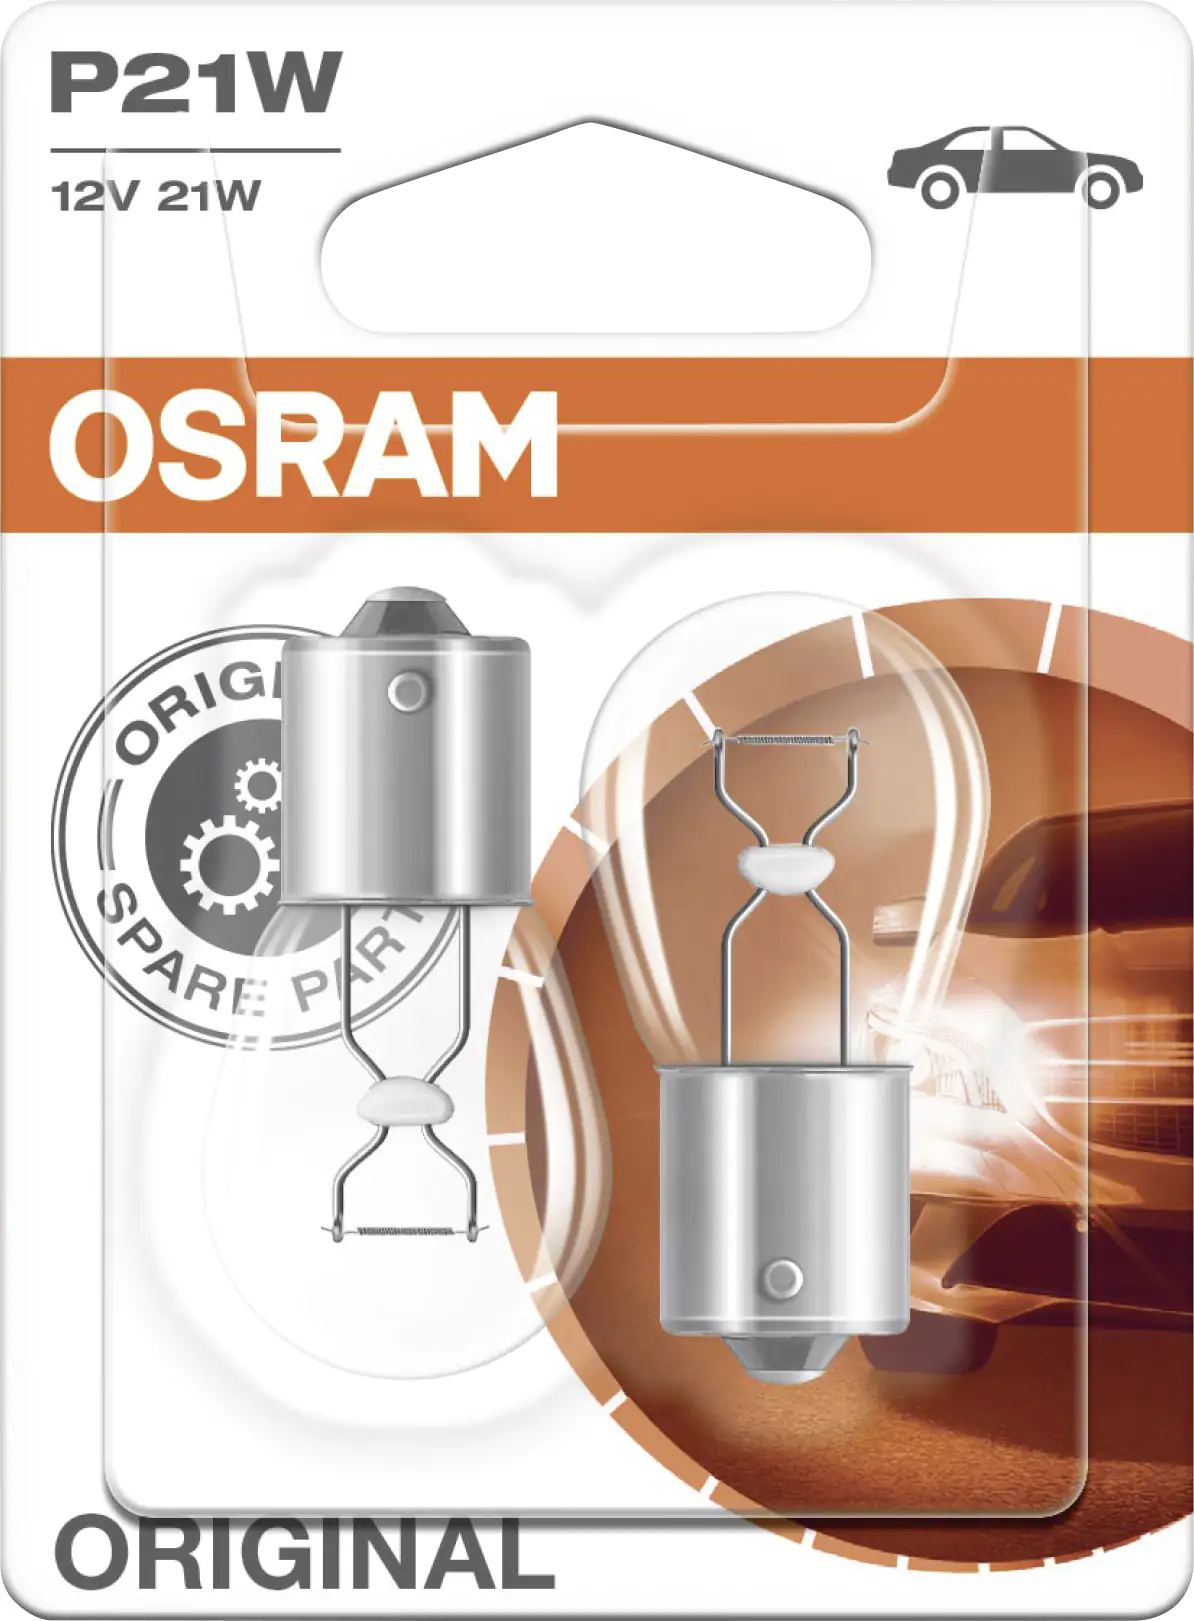 Osram Signallampe P21W 12V 21W kaufen